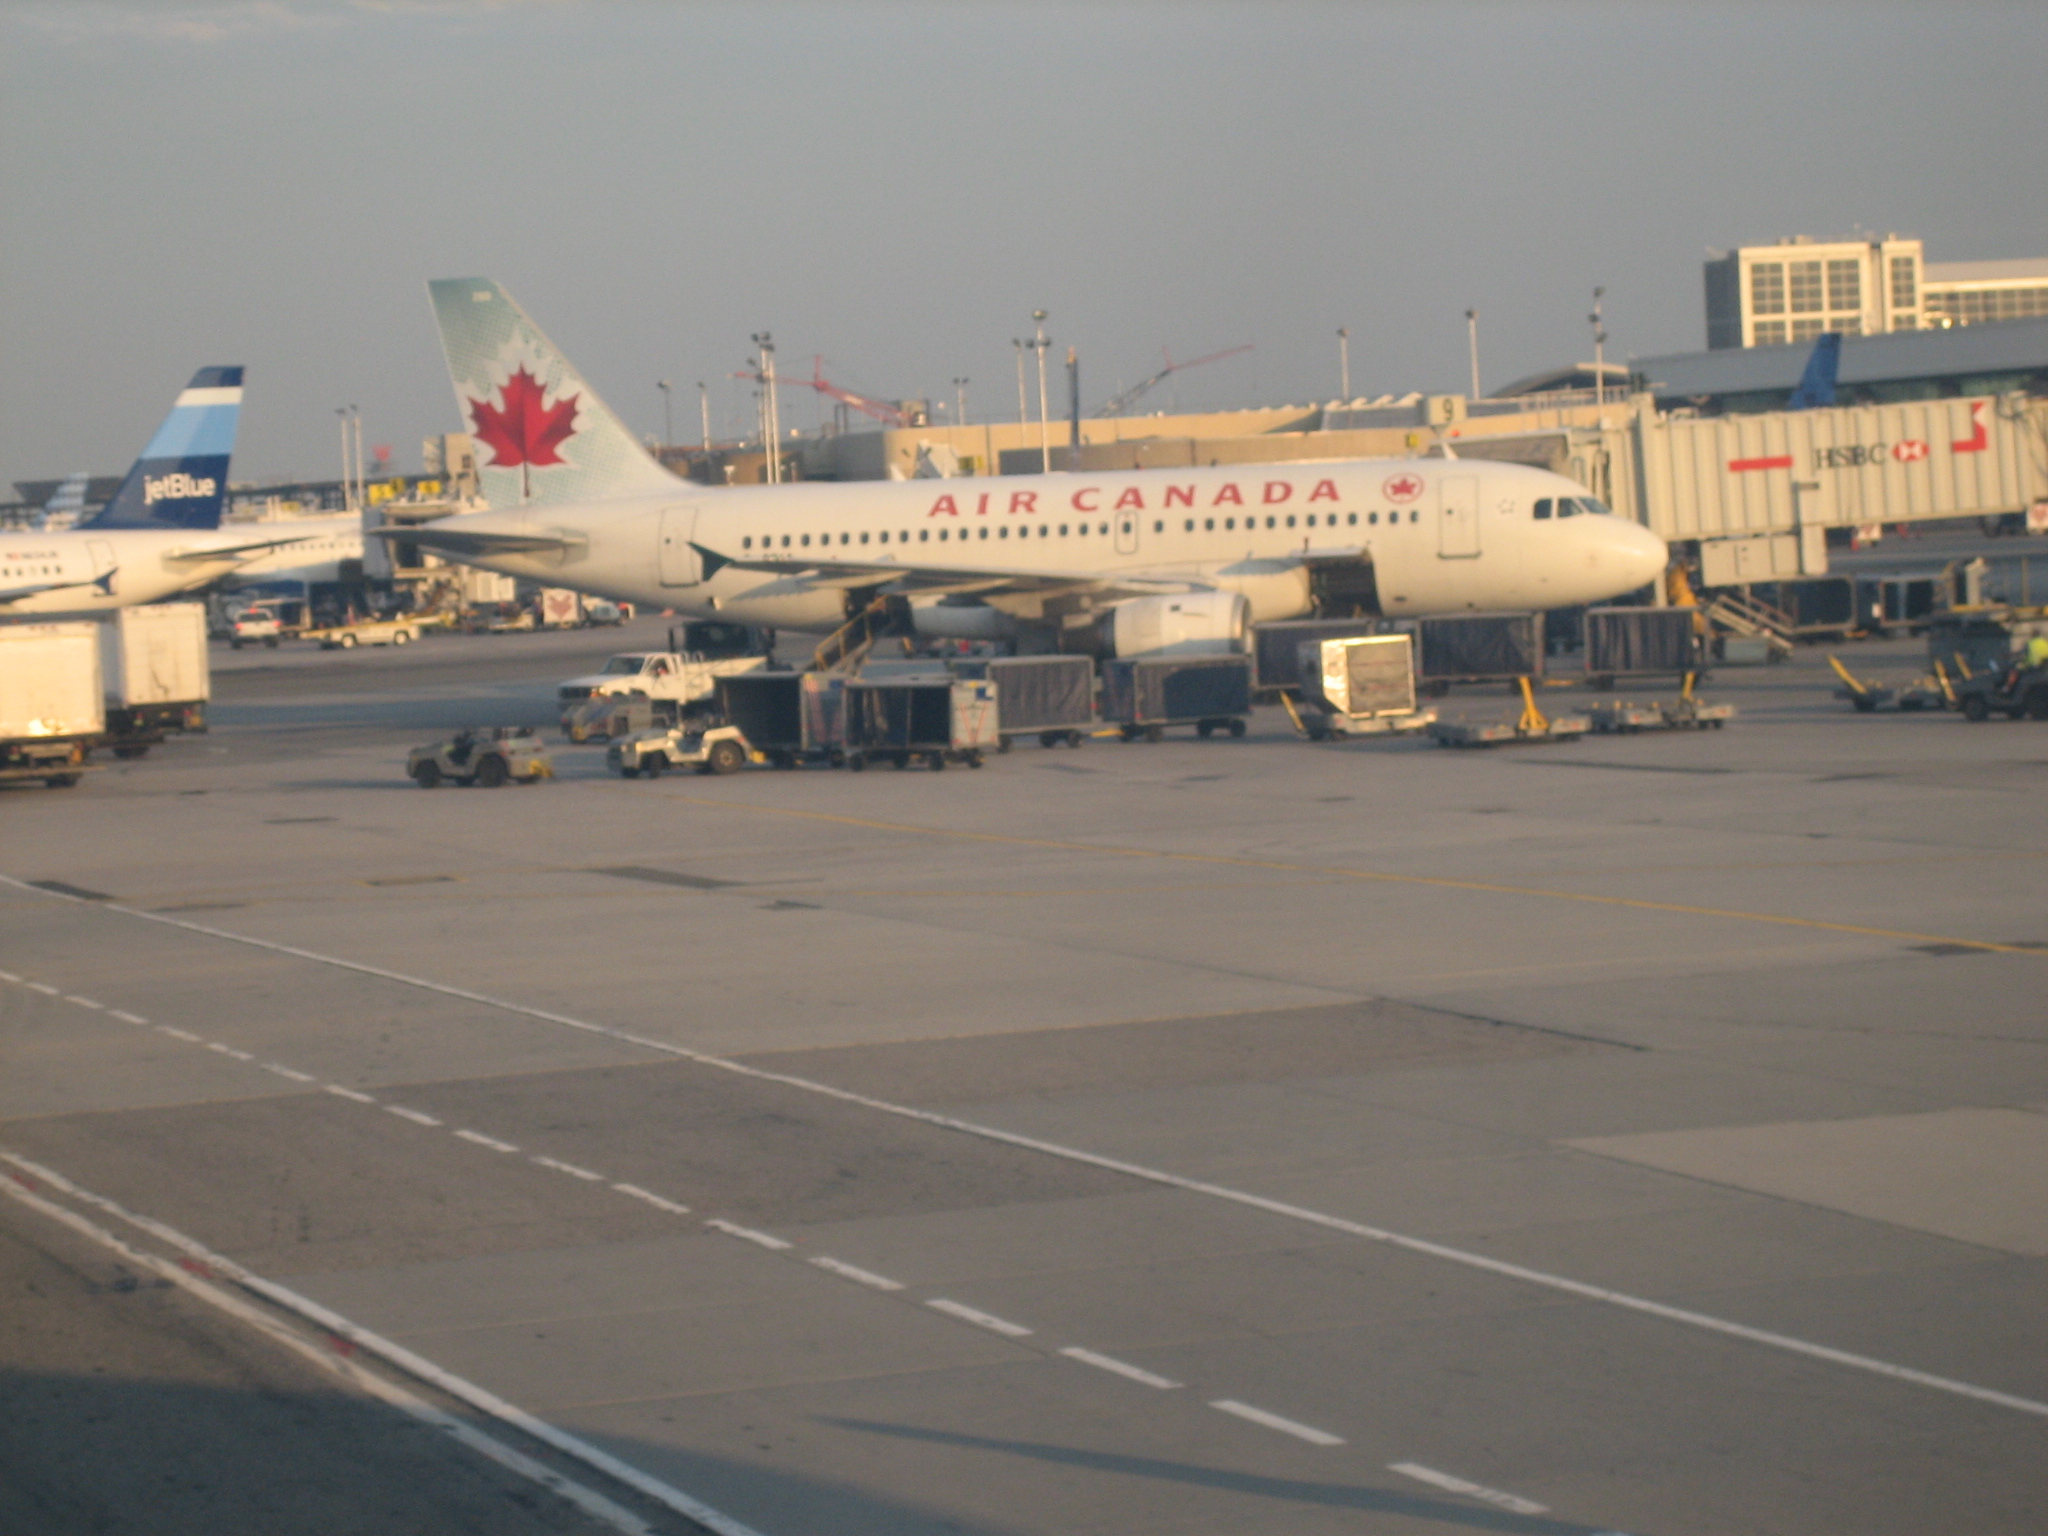 an air canada plane on the runway